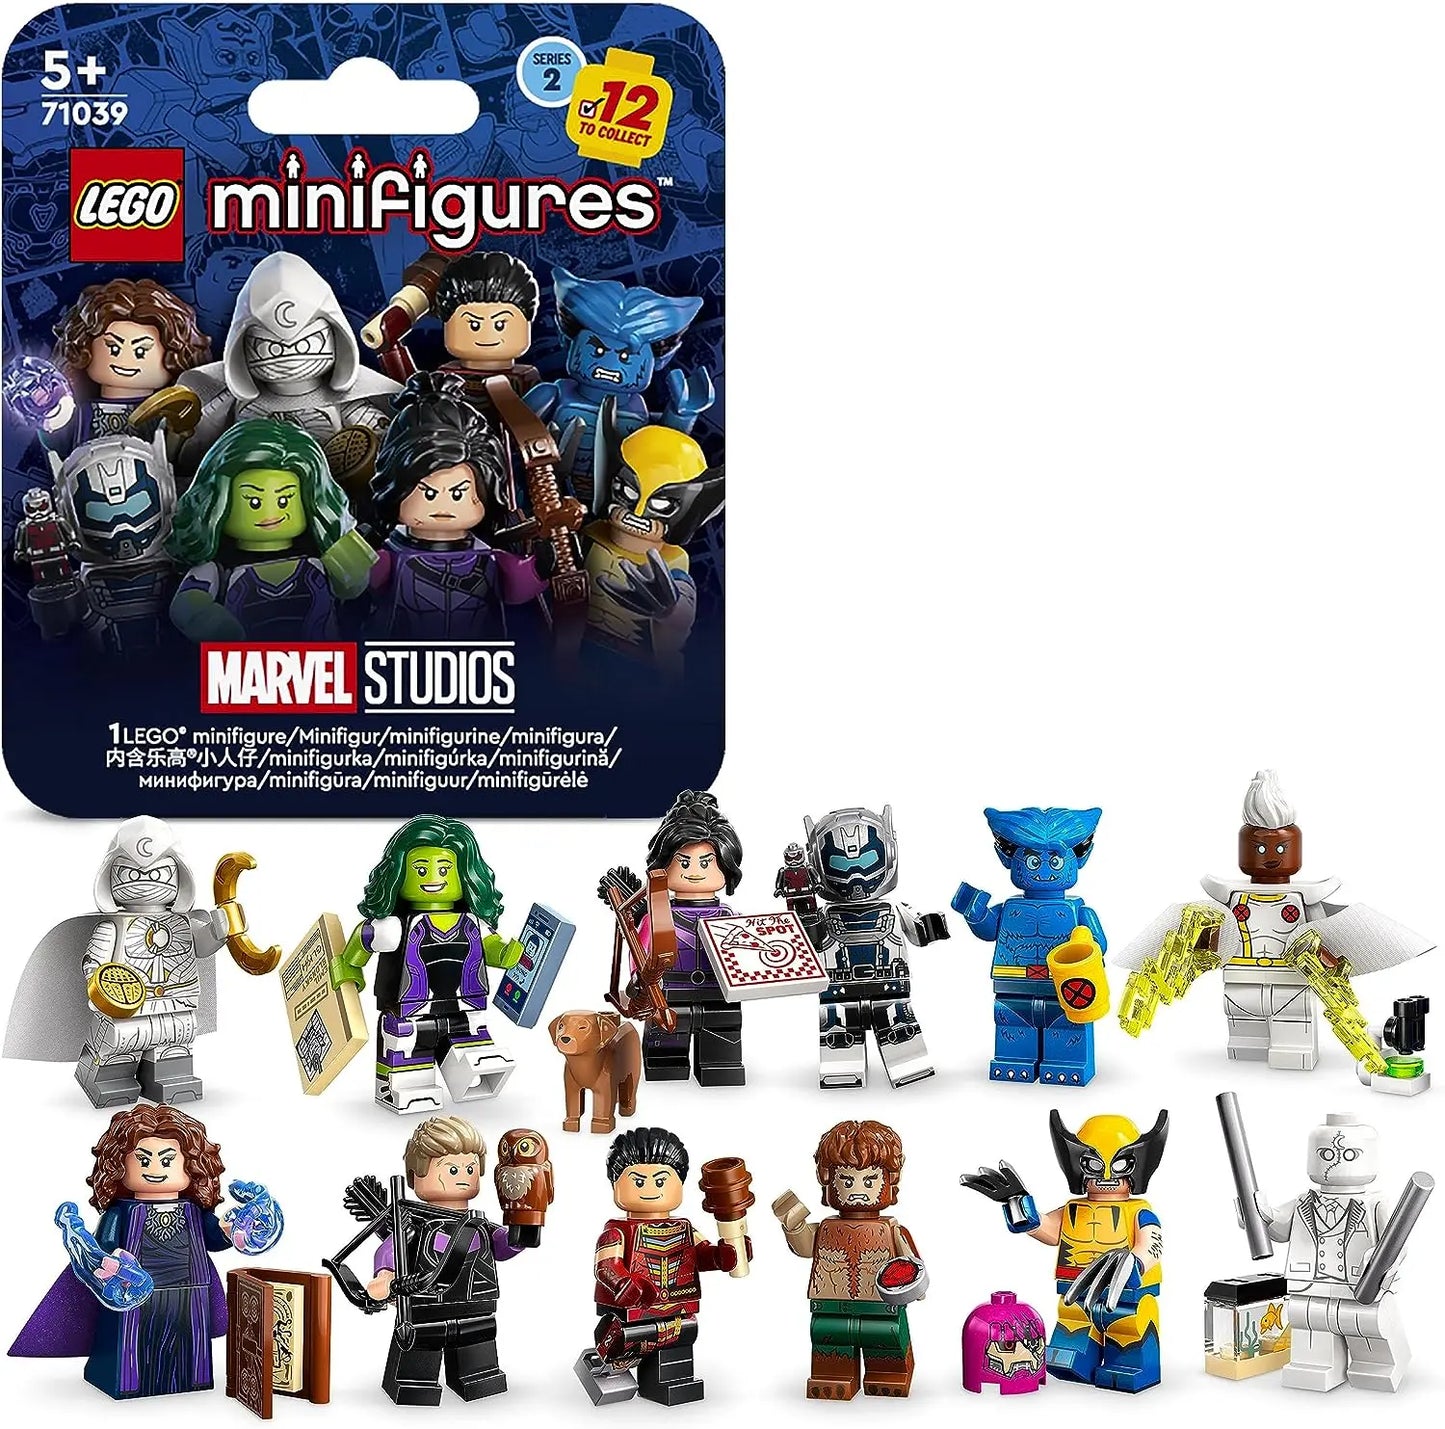 jouet 71039 LEGO Minifigures Série Marvel 2 lego